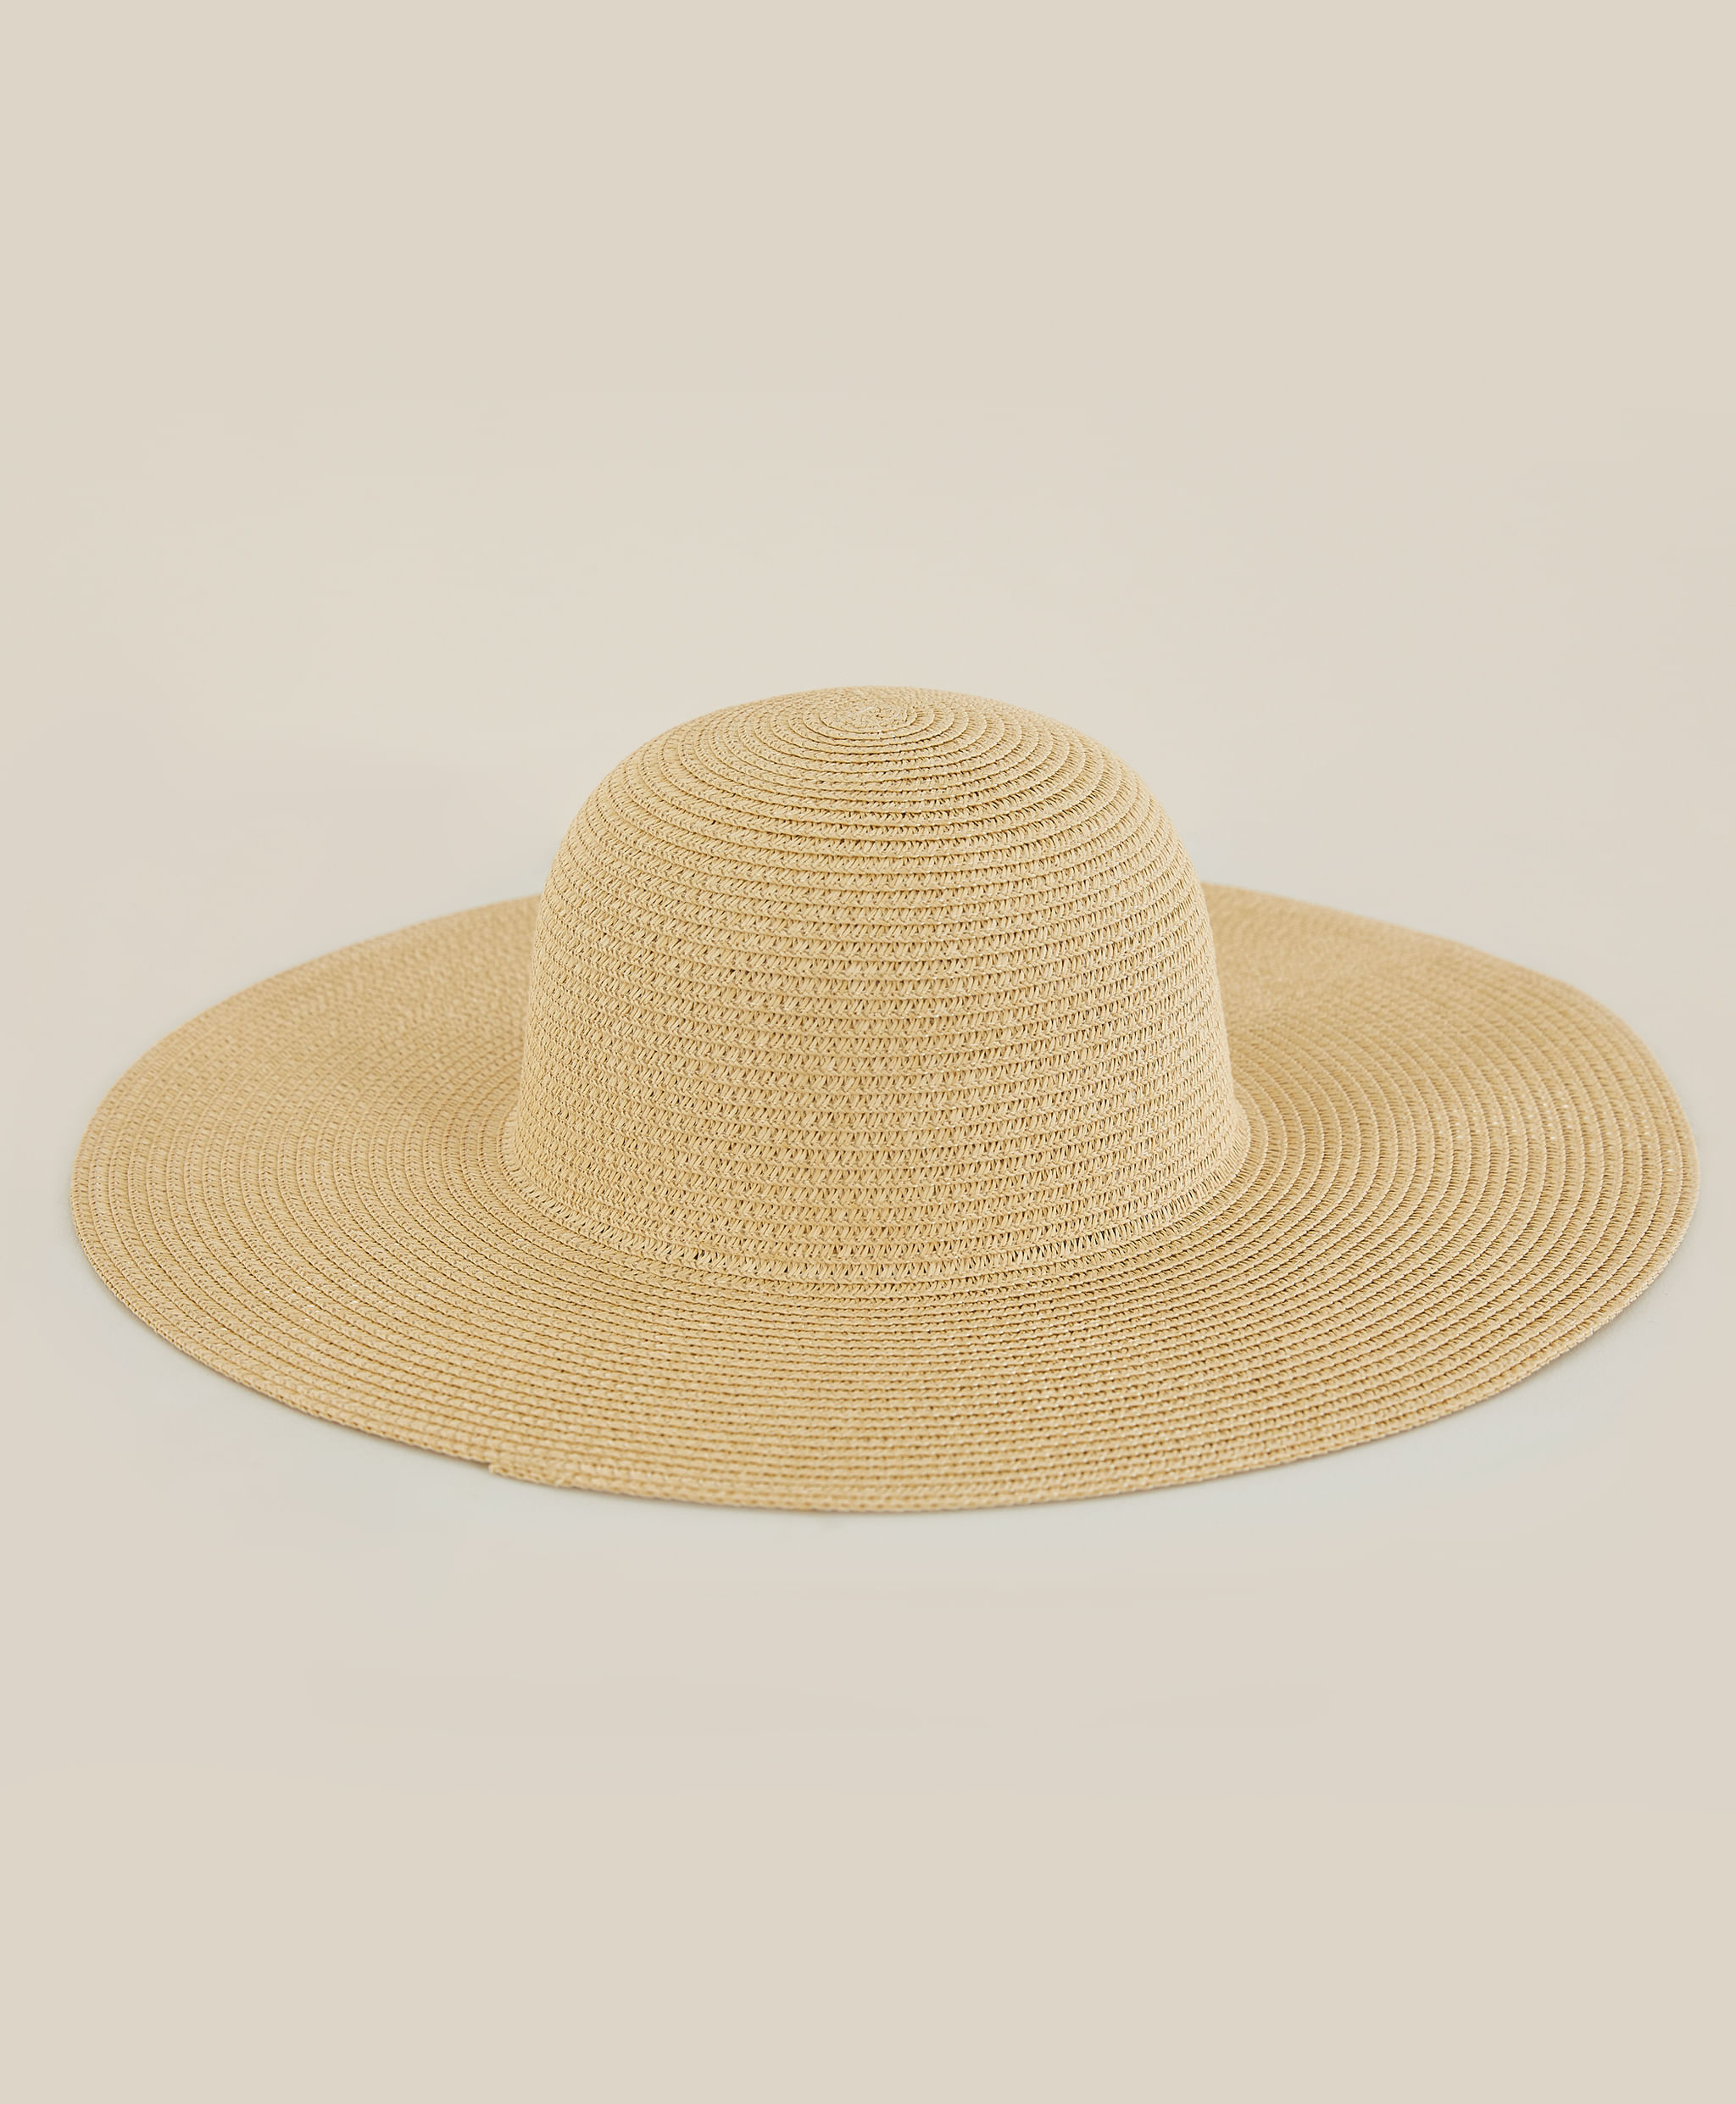 Yamasaki-san-gacha editar balde chapéu praia turismo chapéus boné